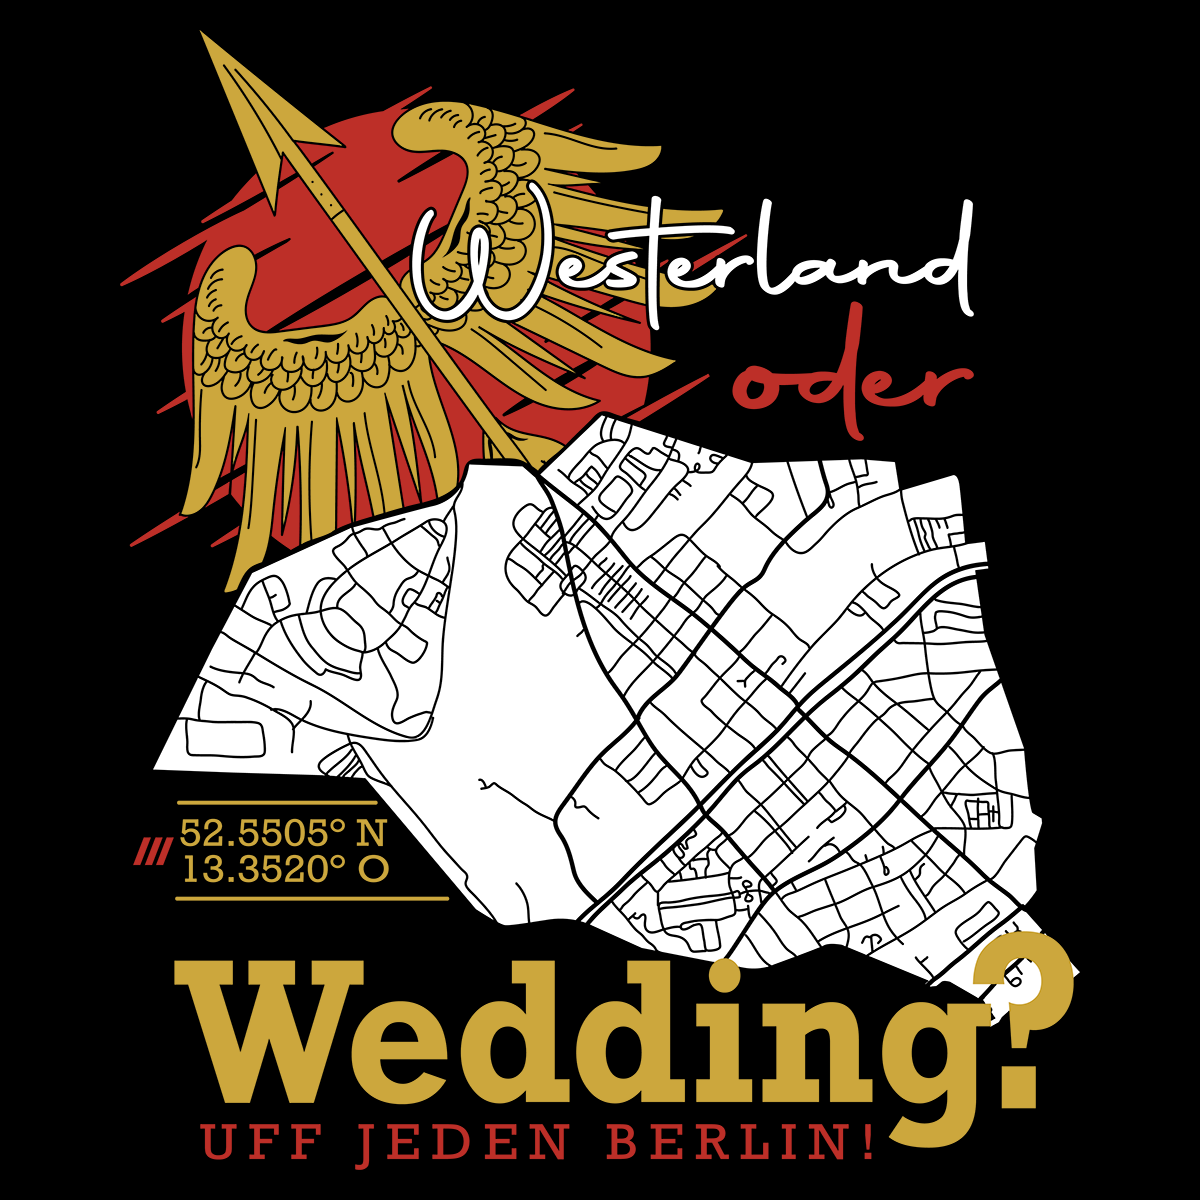 Westerland oder Wedding